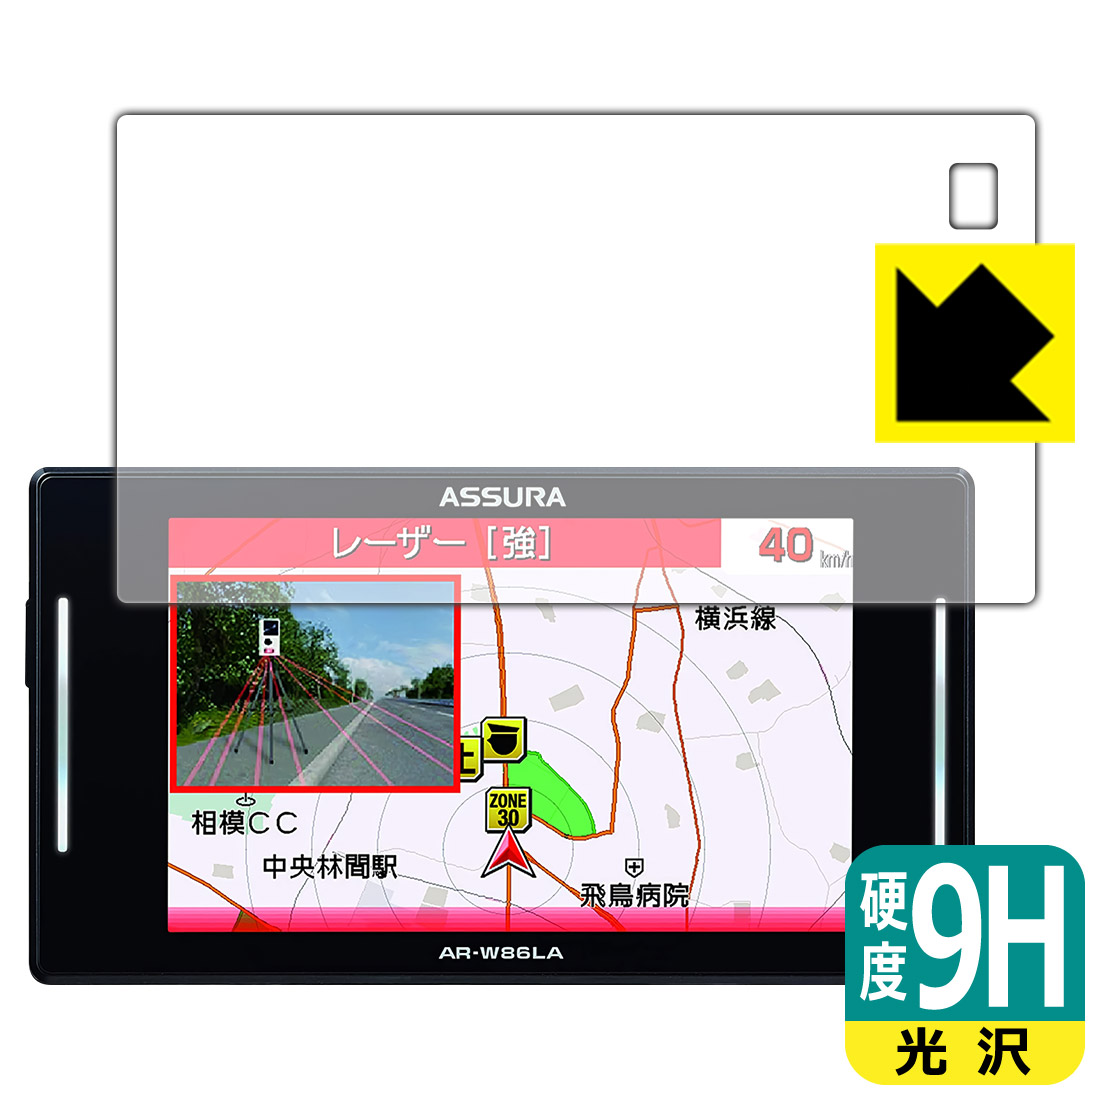 【64%OFF!】 好きに 9H高硬度保護フィルム GPSレーダー探知機 ASSURA AR-W86LA 日本製 自社製造直販 walletz4u.com walletz4u.com